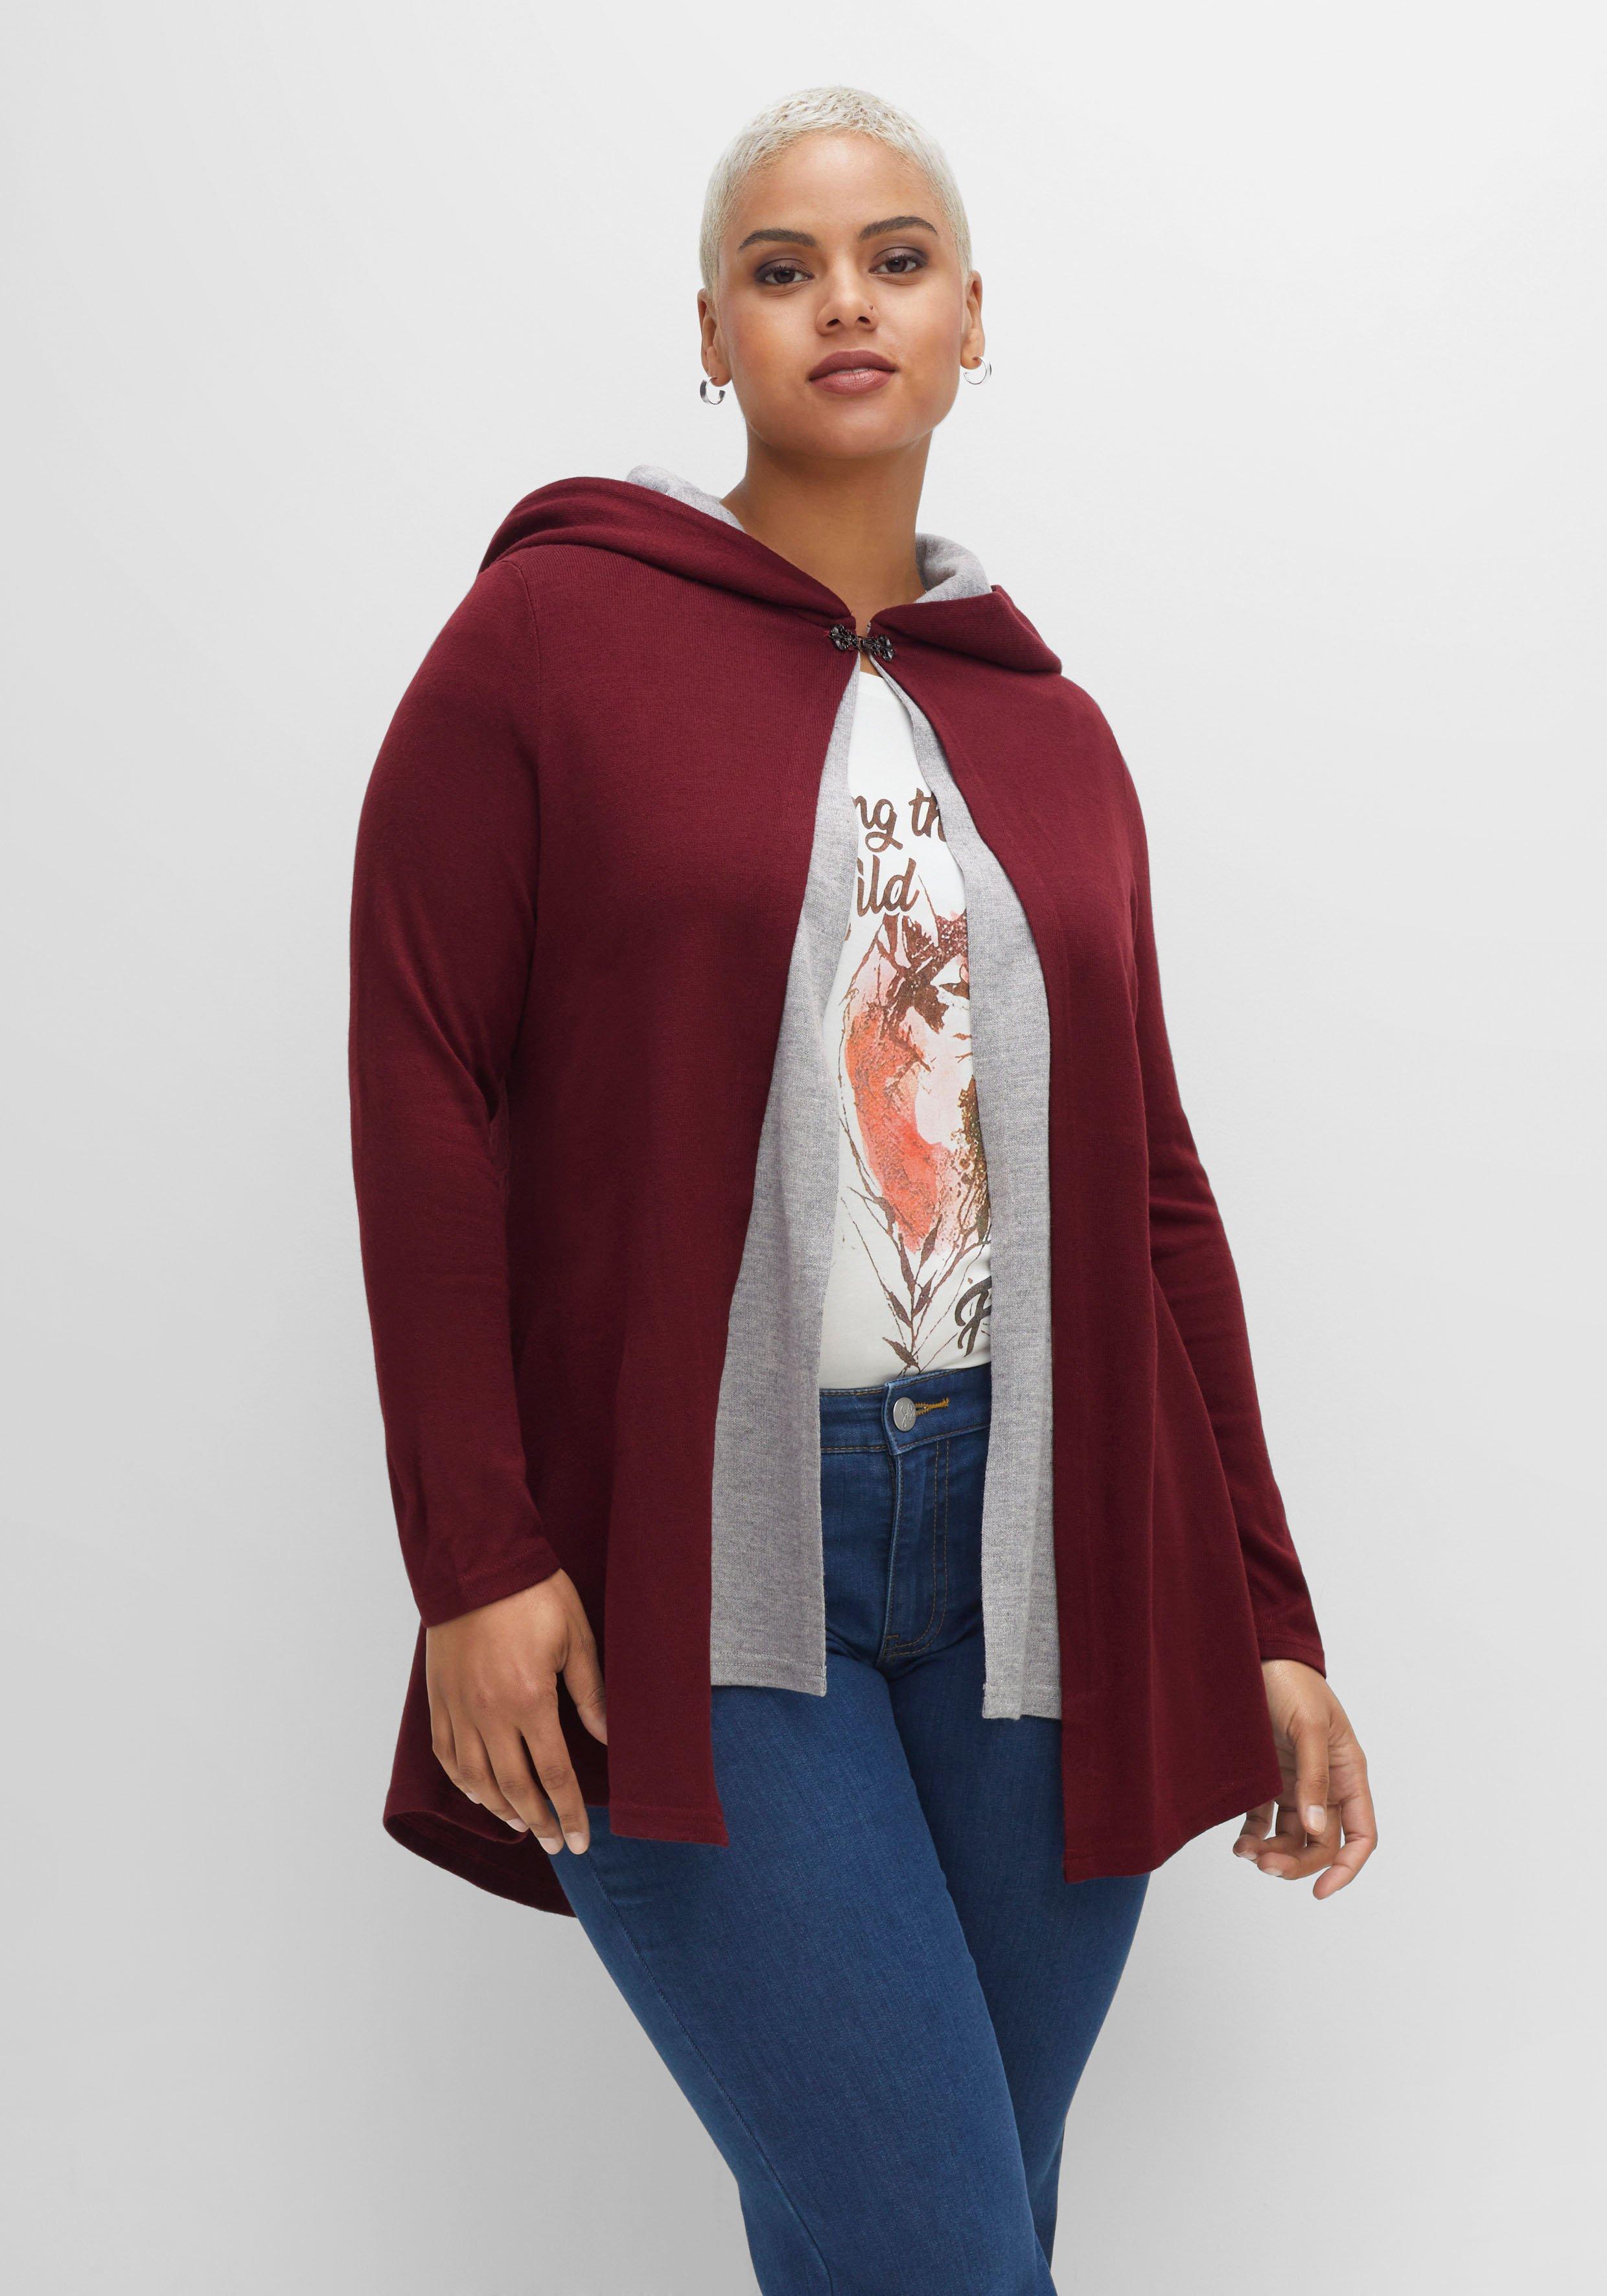 Size Plus & lang große Größen Mode ♥ | Strickjacken Damen rot Pullover sheego